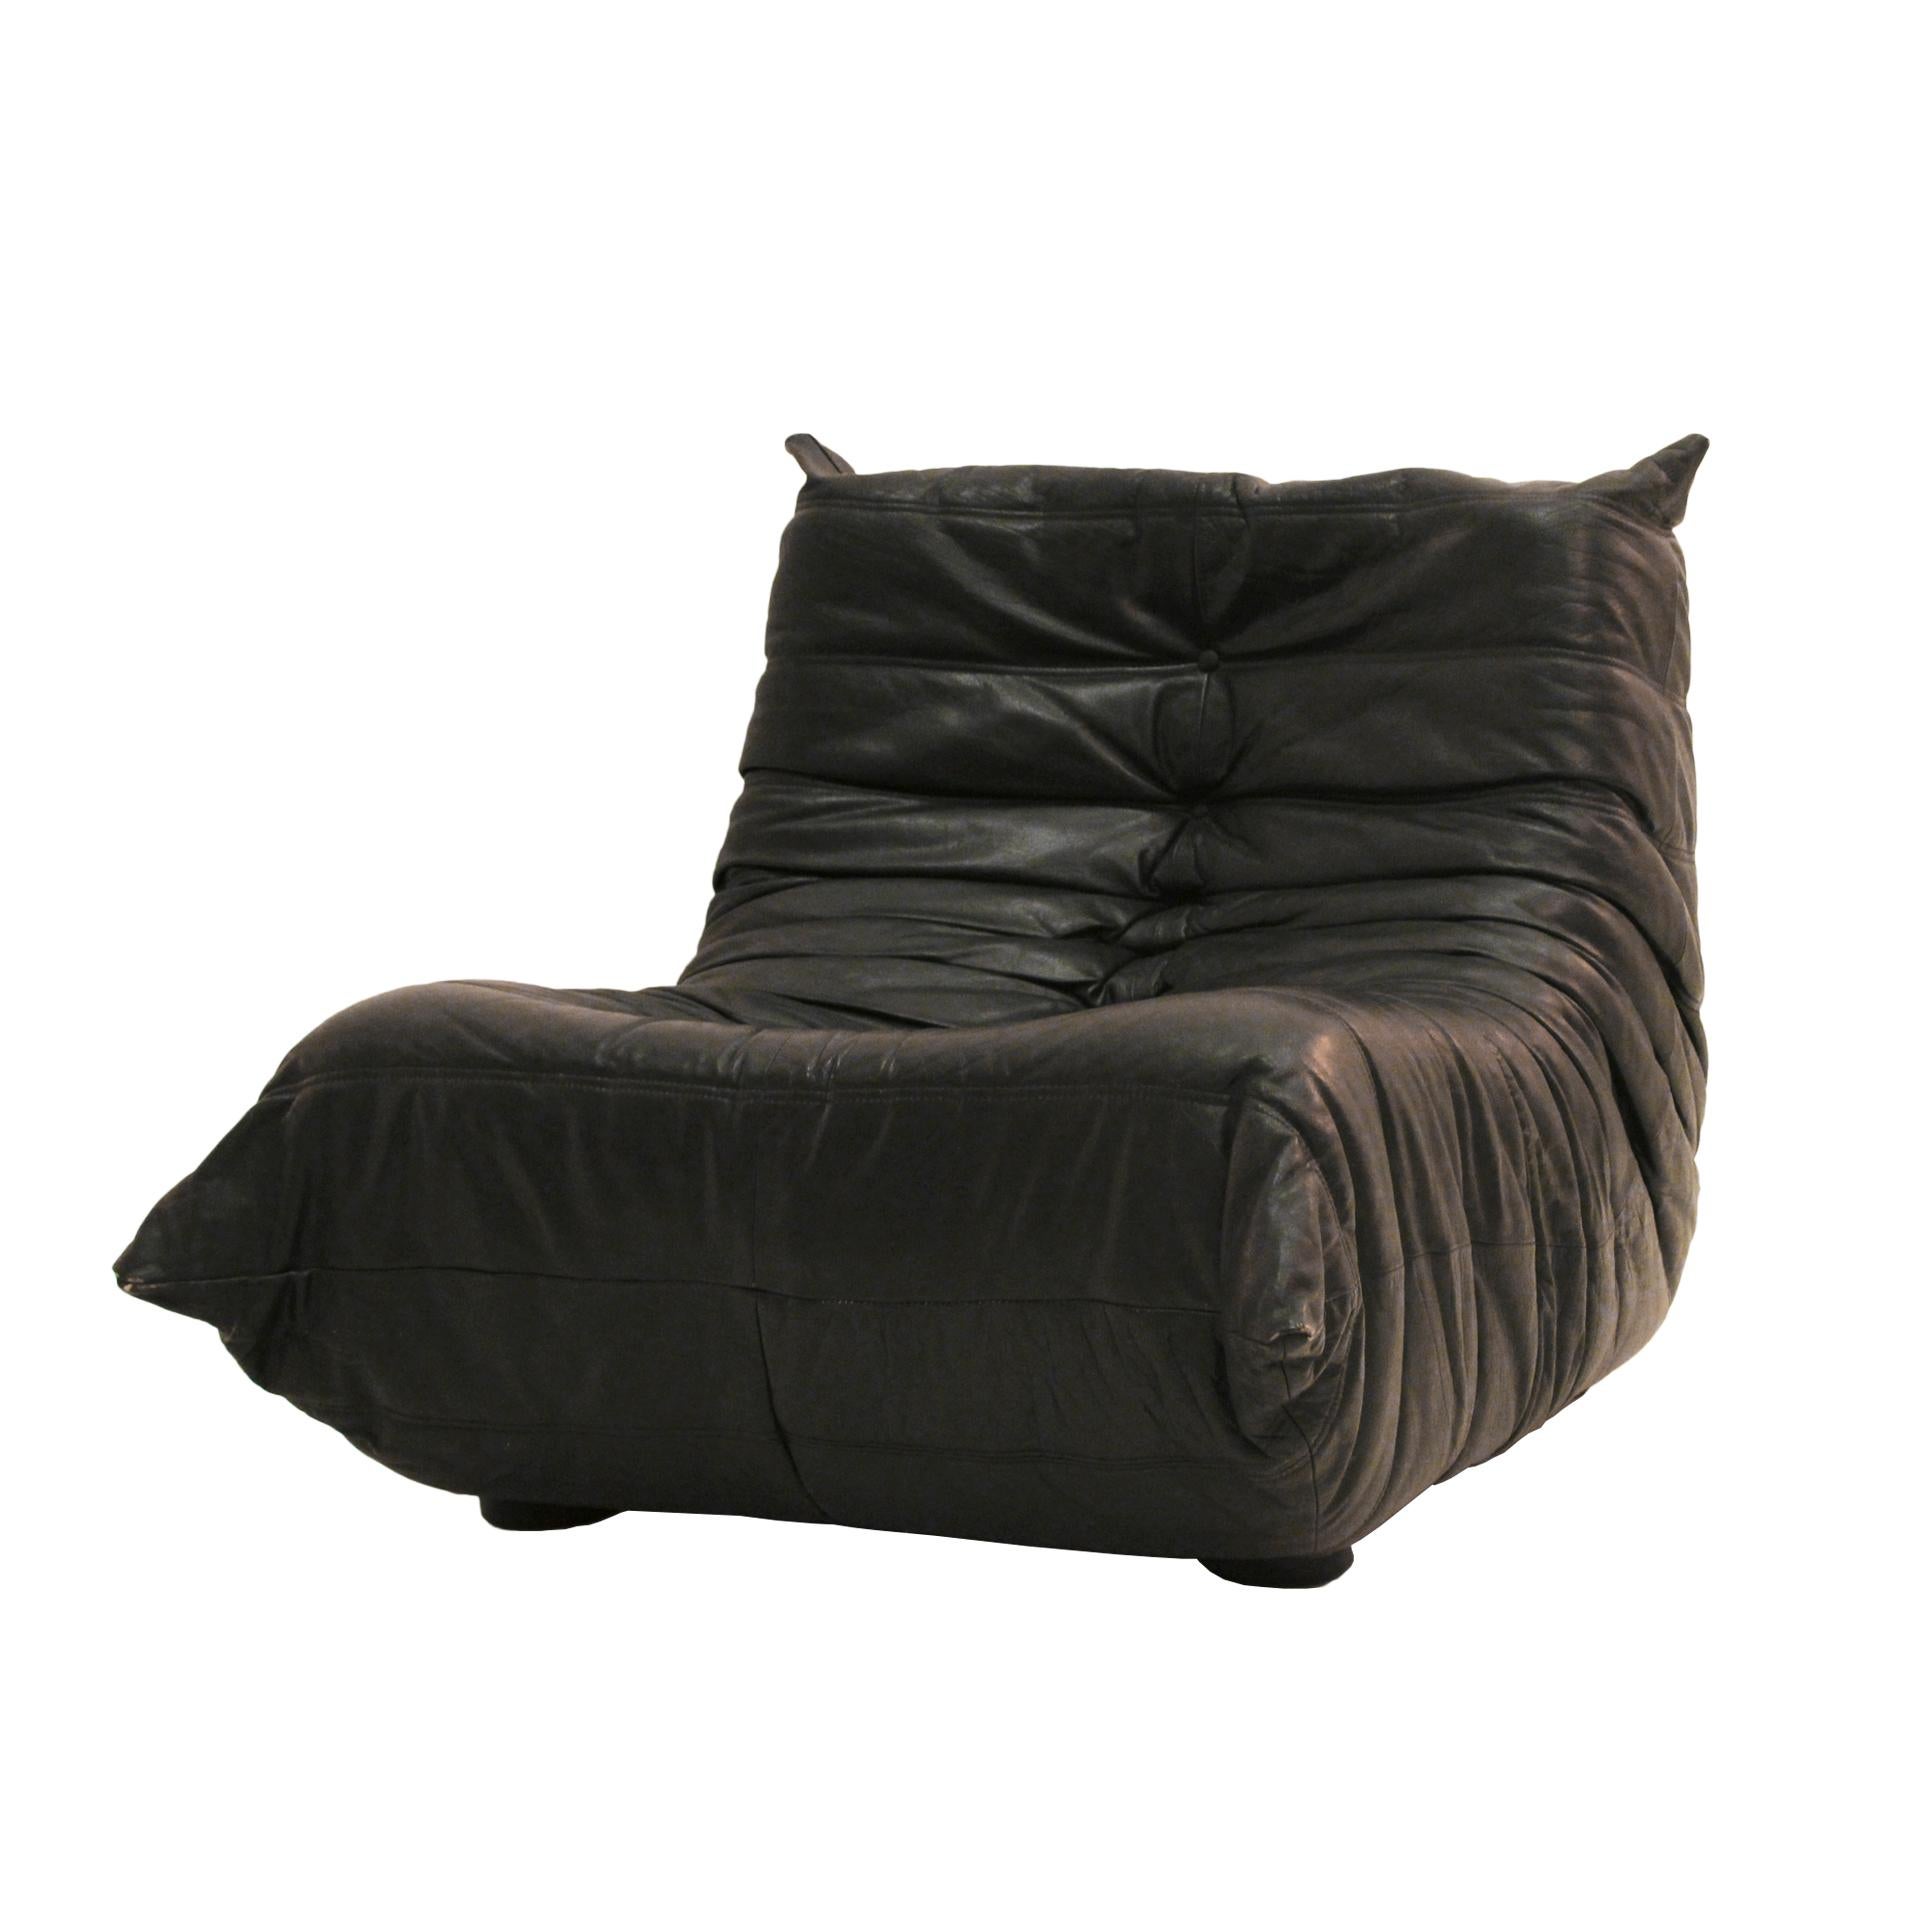 Modern Original Ligne Roset Togo Black Leather Lounge Chair Designed by Michel Ducaroy